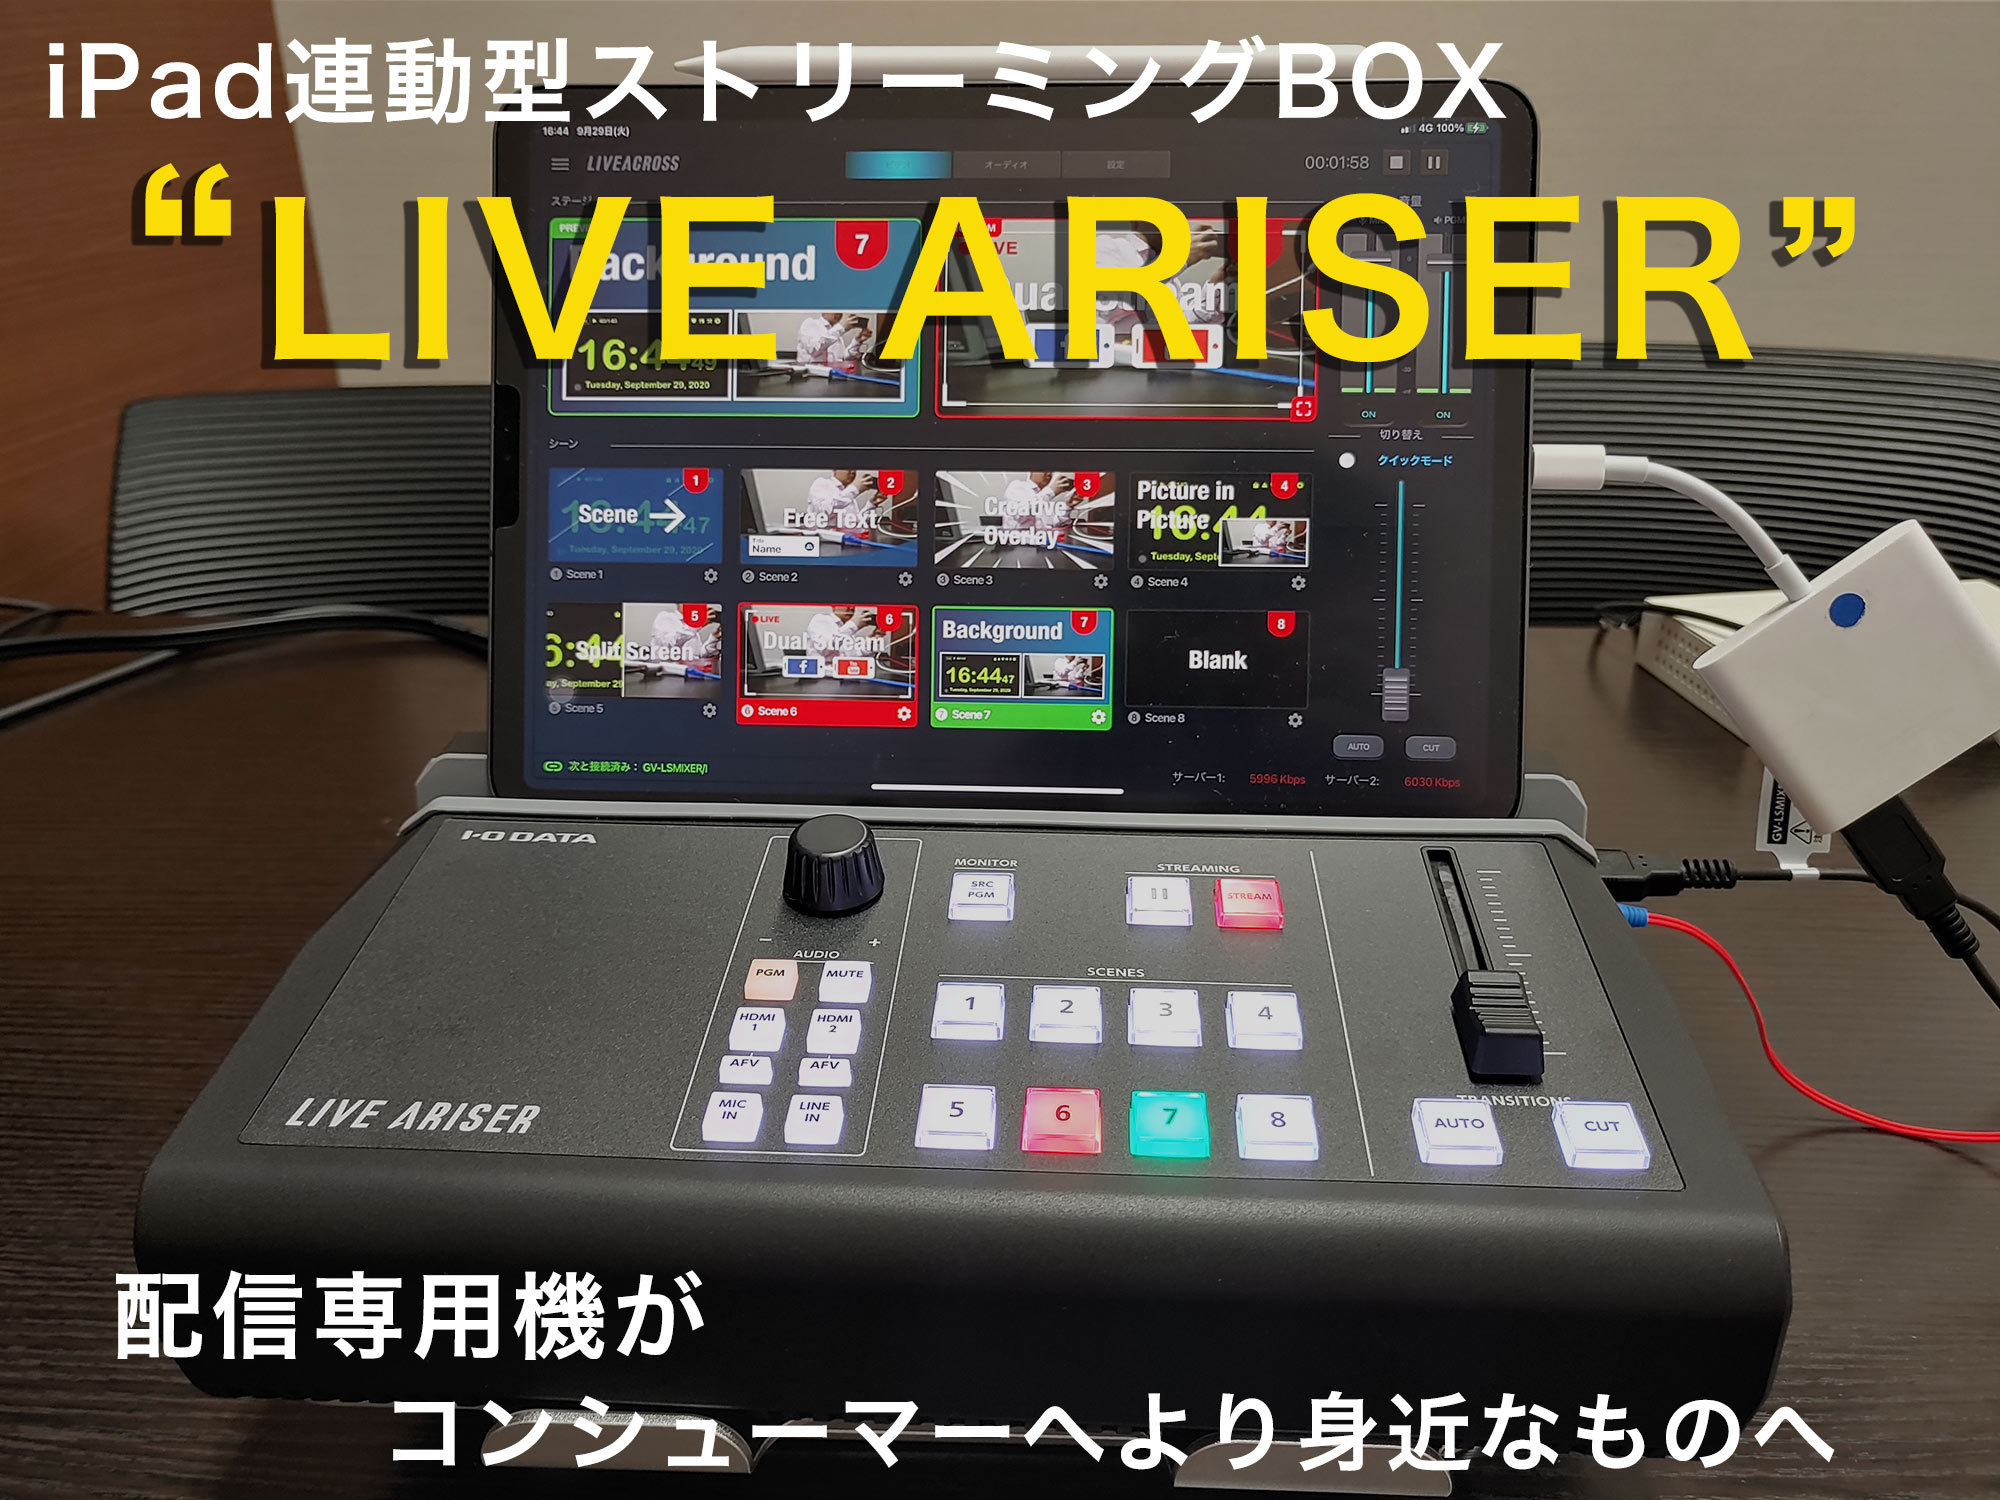 iPad連動型ストリーミングBOX “LIVE ARISER” 配信専用機が